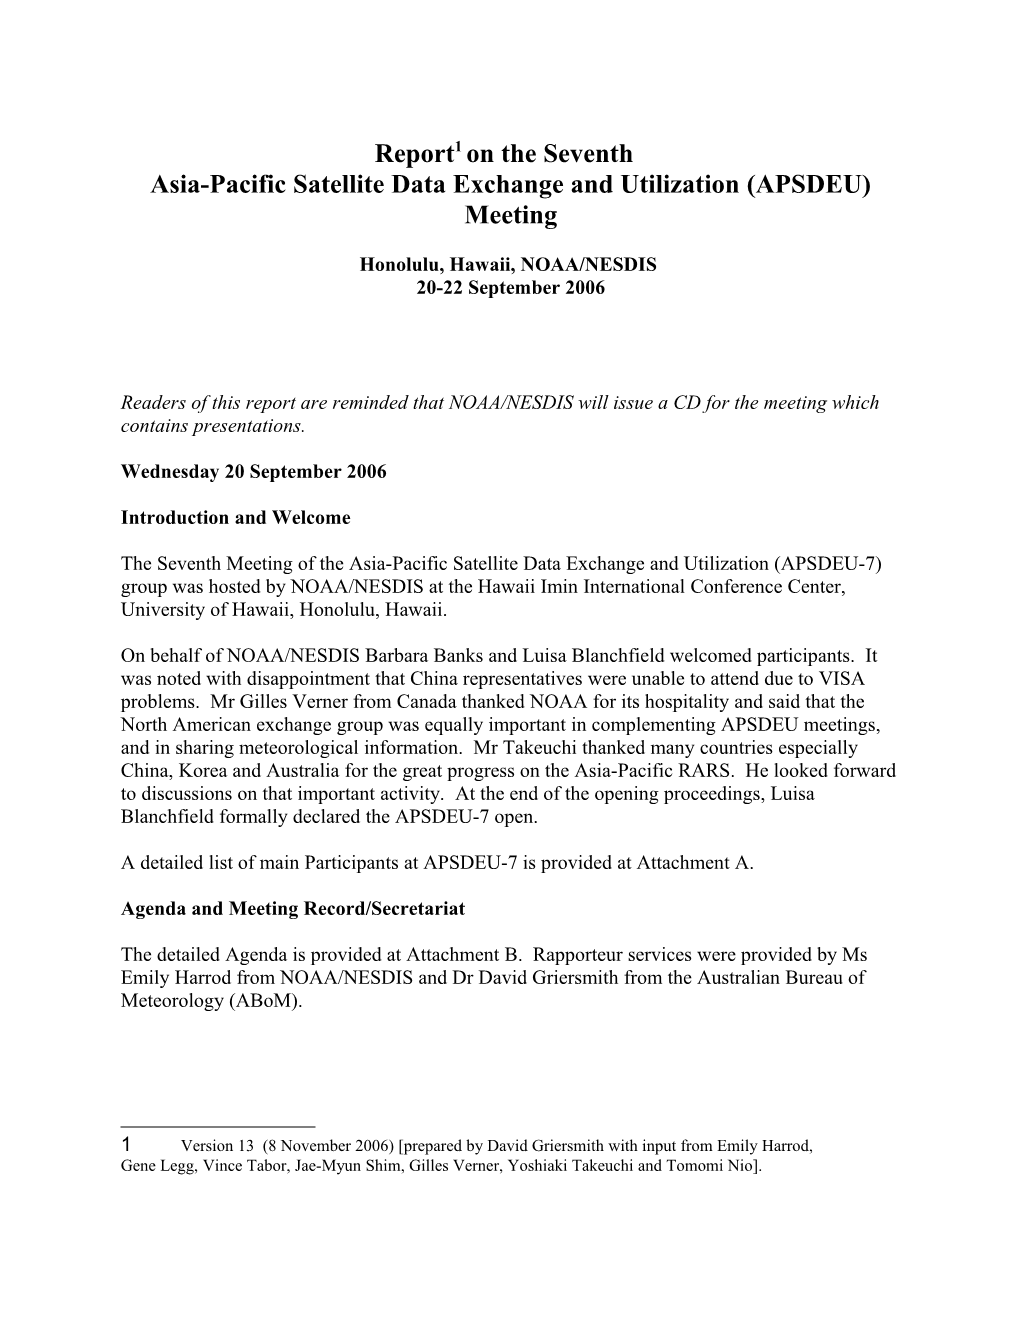 Asia-Pacific Satellite Data Exchange and Utilization (APSDEU) Meeting